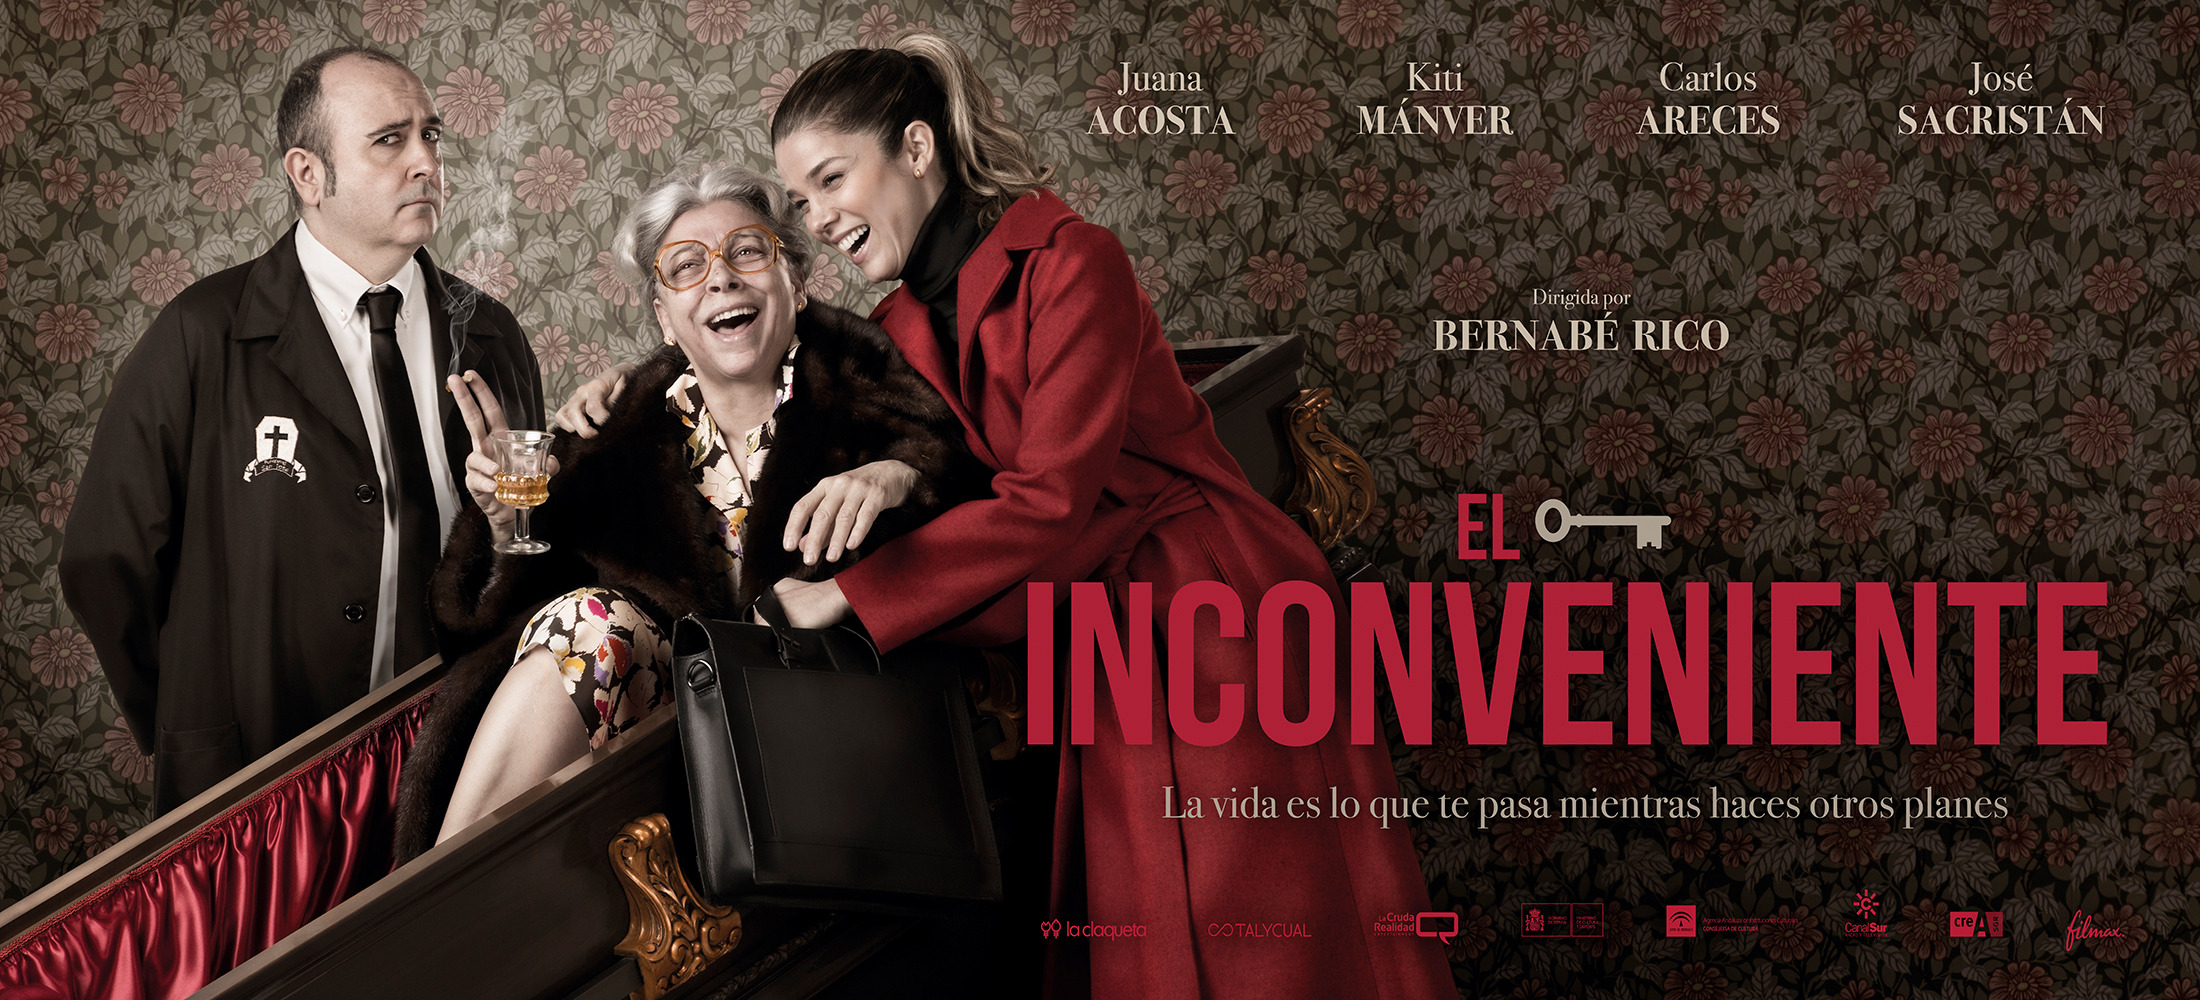 Mega Sized Movie Poster Image for El inconveniente (#2 of 4)